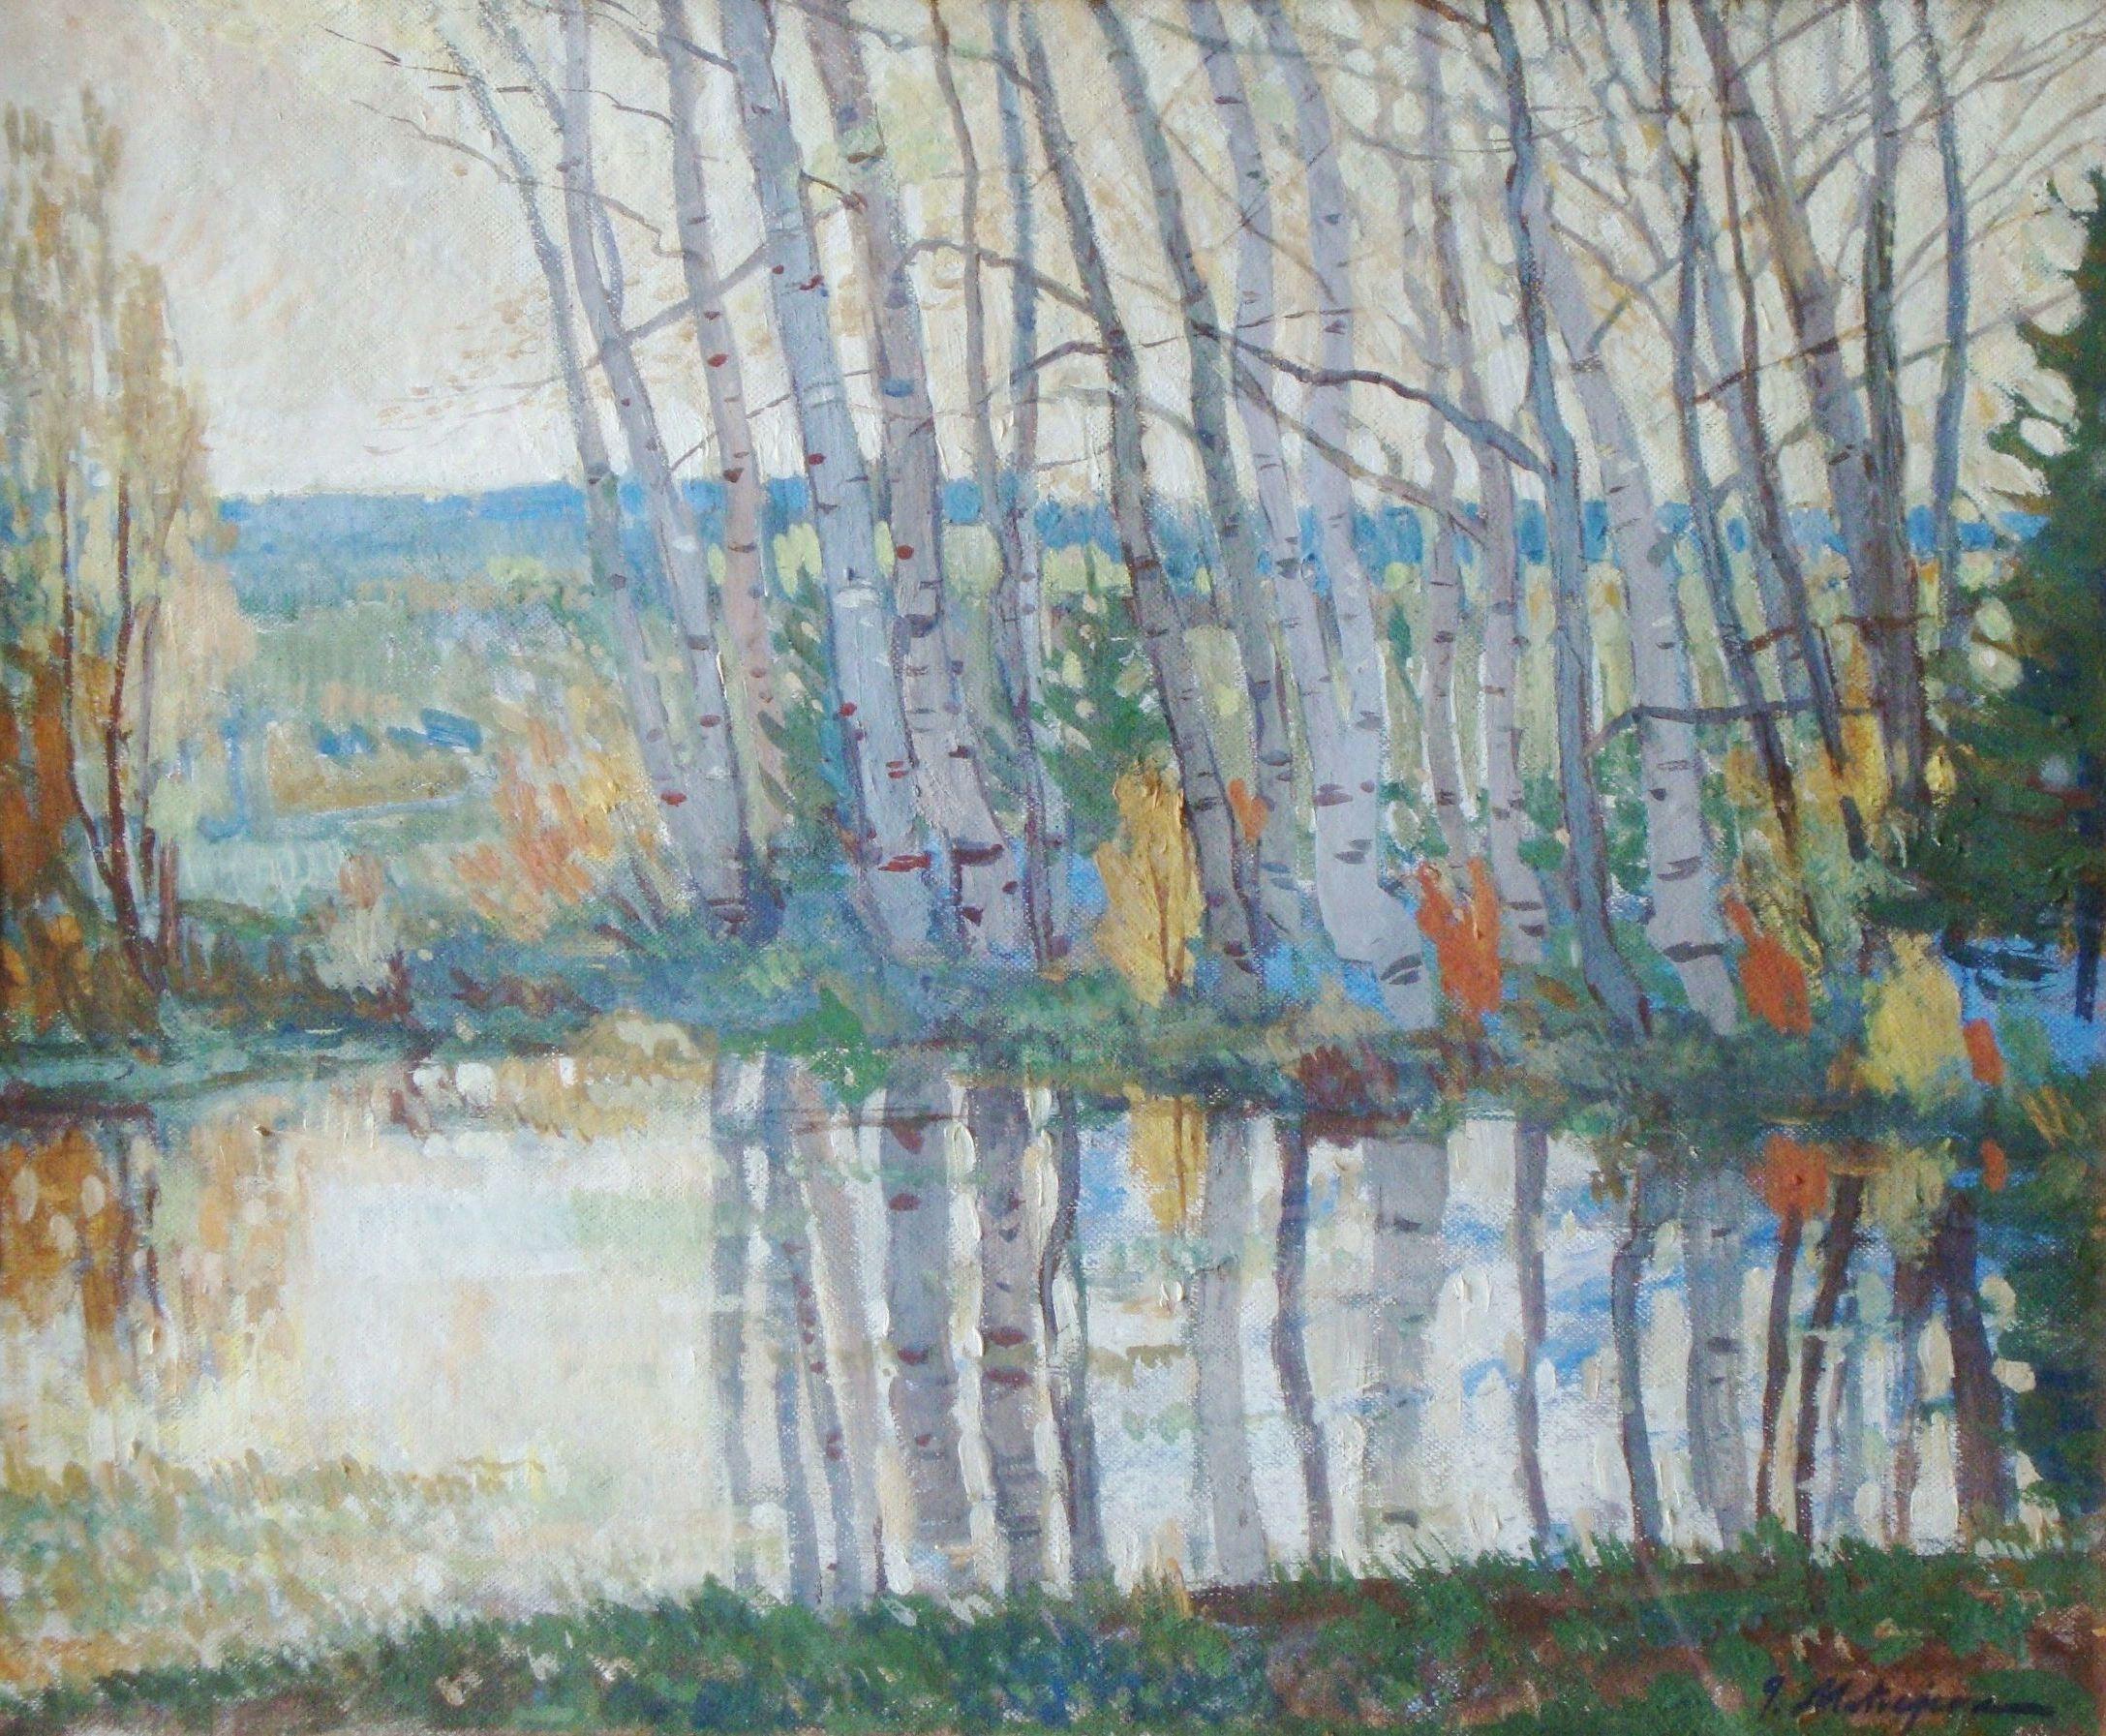 Georg Matveevs Landscape Painting - Landscape with birches. 1960s. Oil on canvas, 52x62 cm